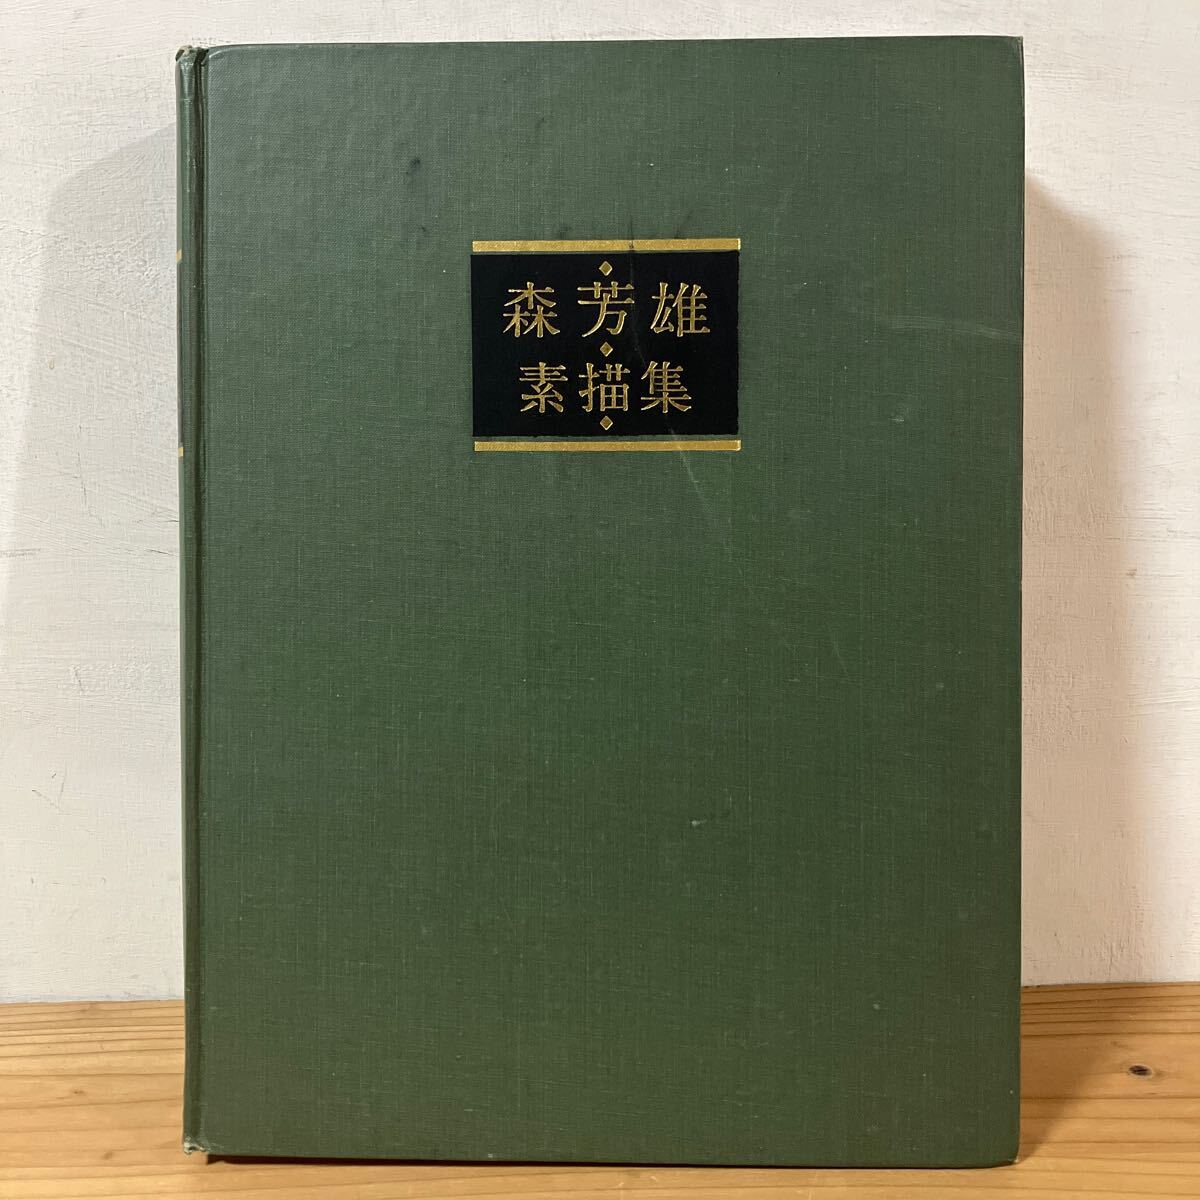 Mowo■0311 [Colección de dibujos de Mori Yoshio] Limitado a 1200 copias Catálogo de la Galería Yayoi 1981, cuadro, Libro de arte, colección de obras, Libro de arte